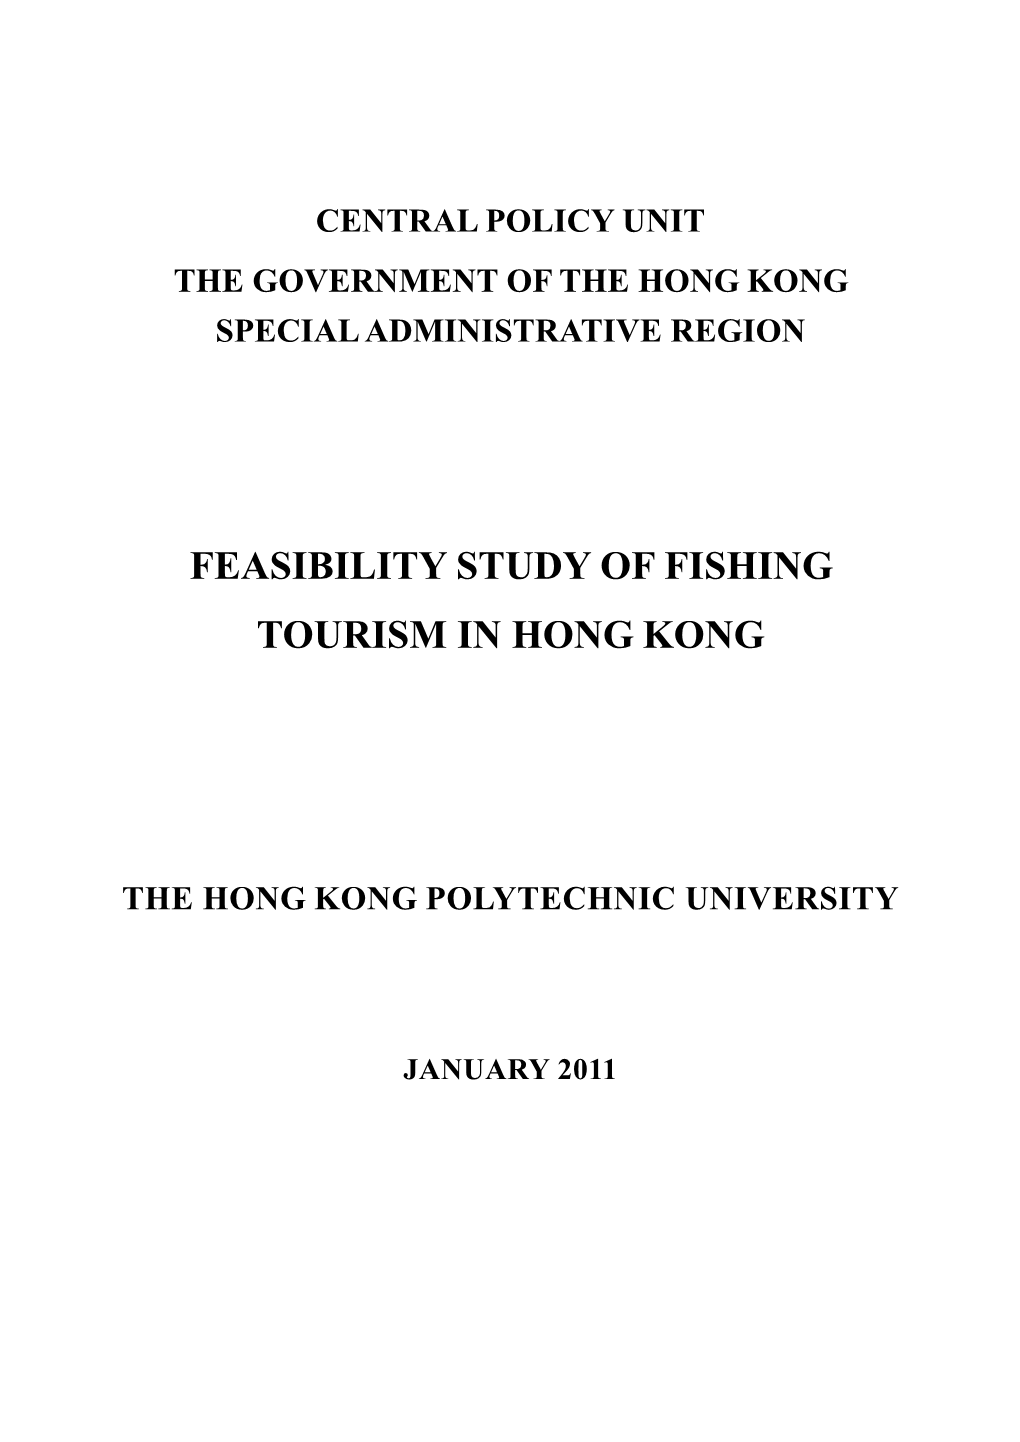 Feasibility Study of Fishing Tourism in Hong Kong